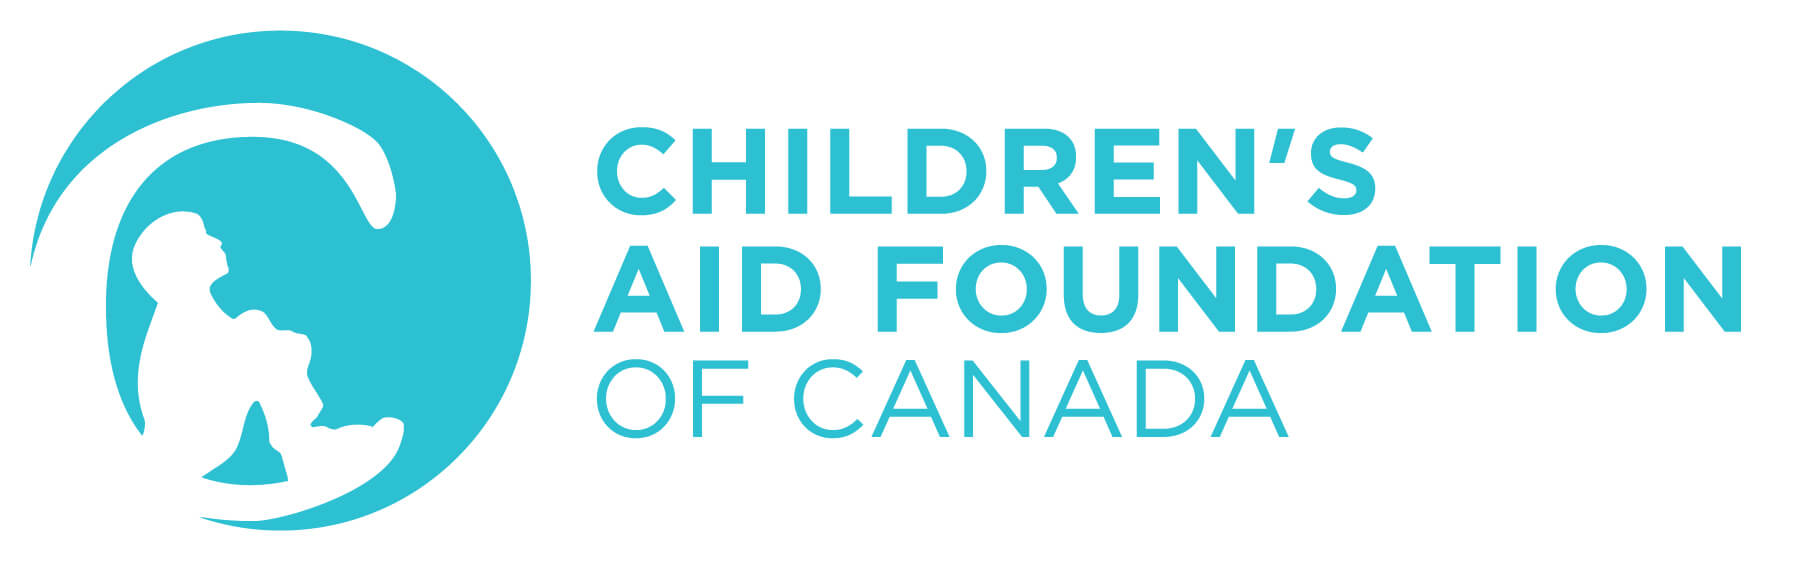 Children's Aid Foundation of CAD